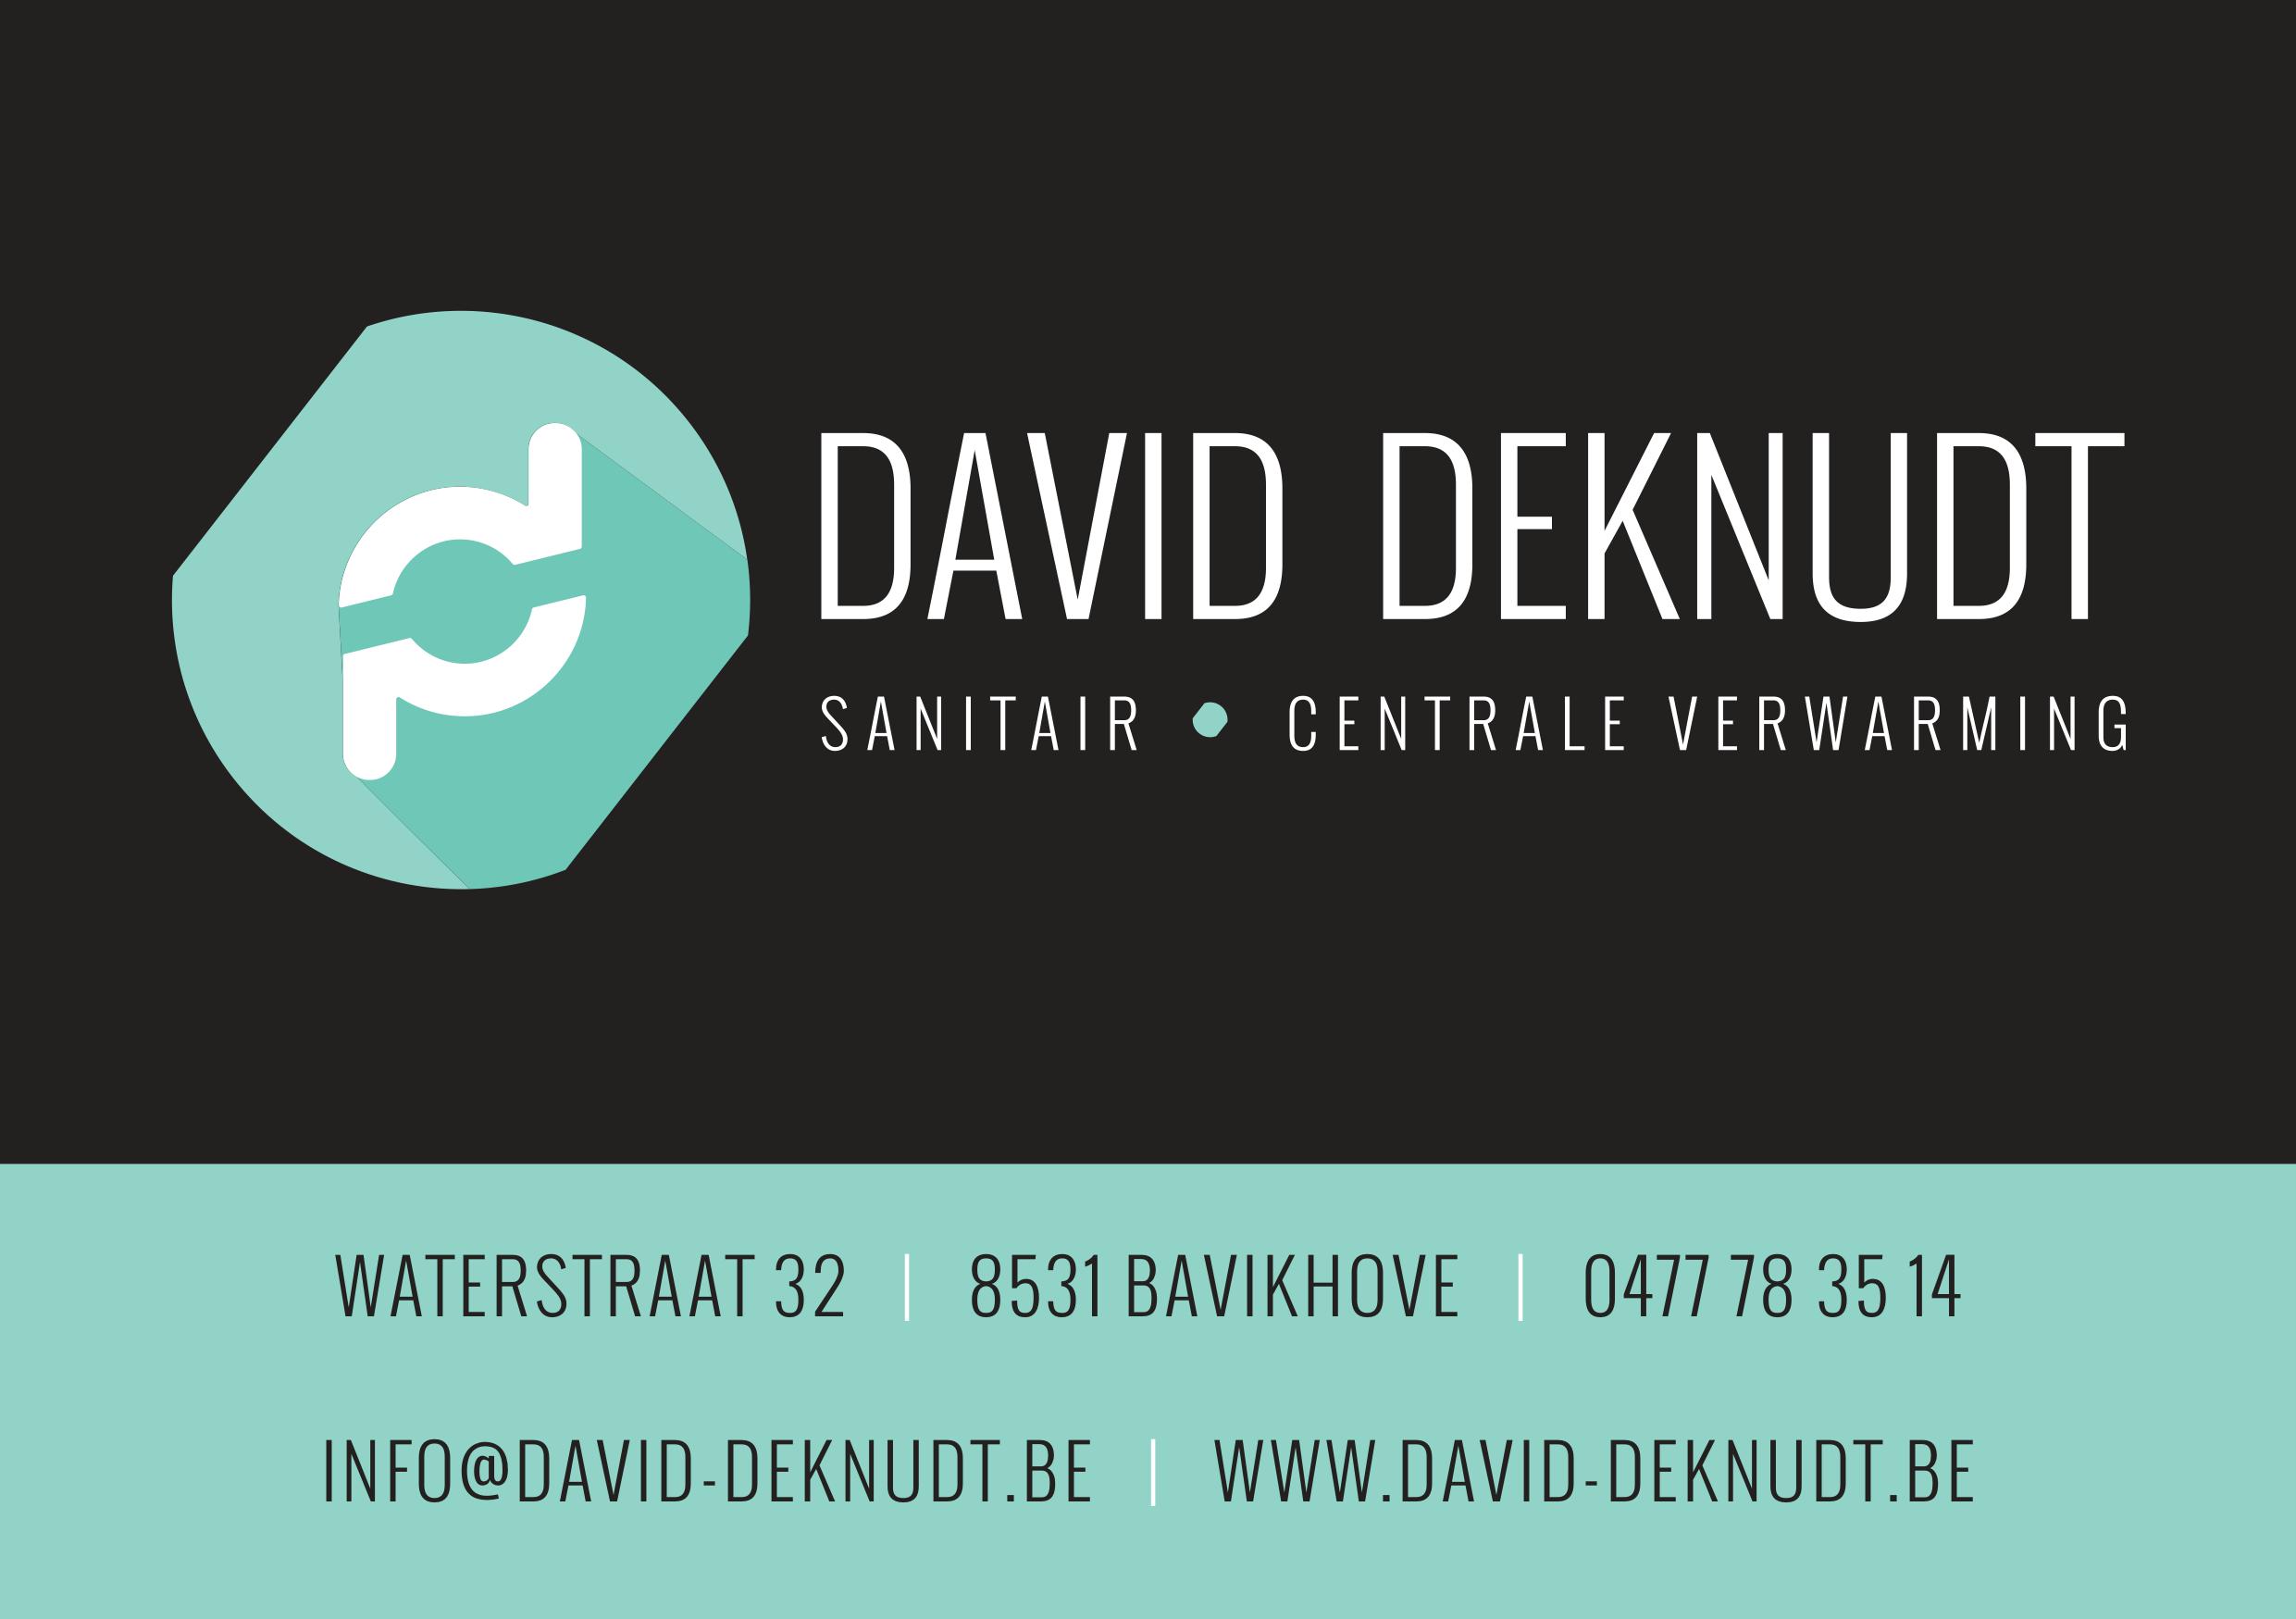 David Deknudt Sanitair & CV http://www.david-deknudt.be/